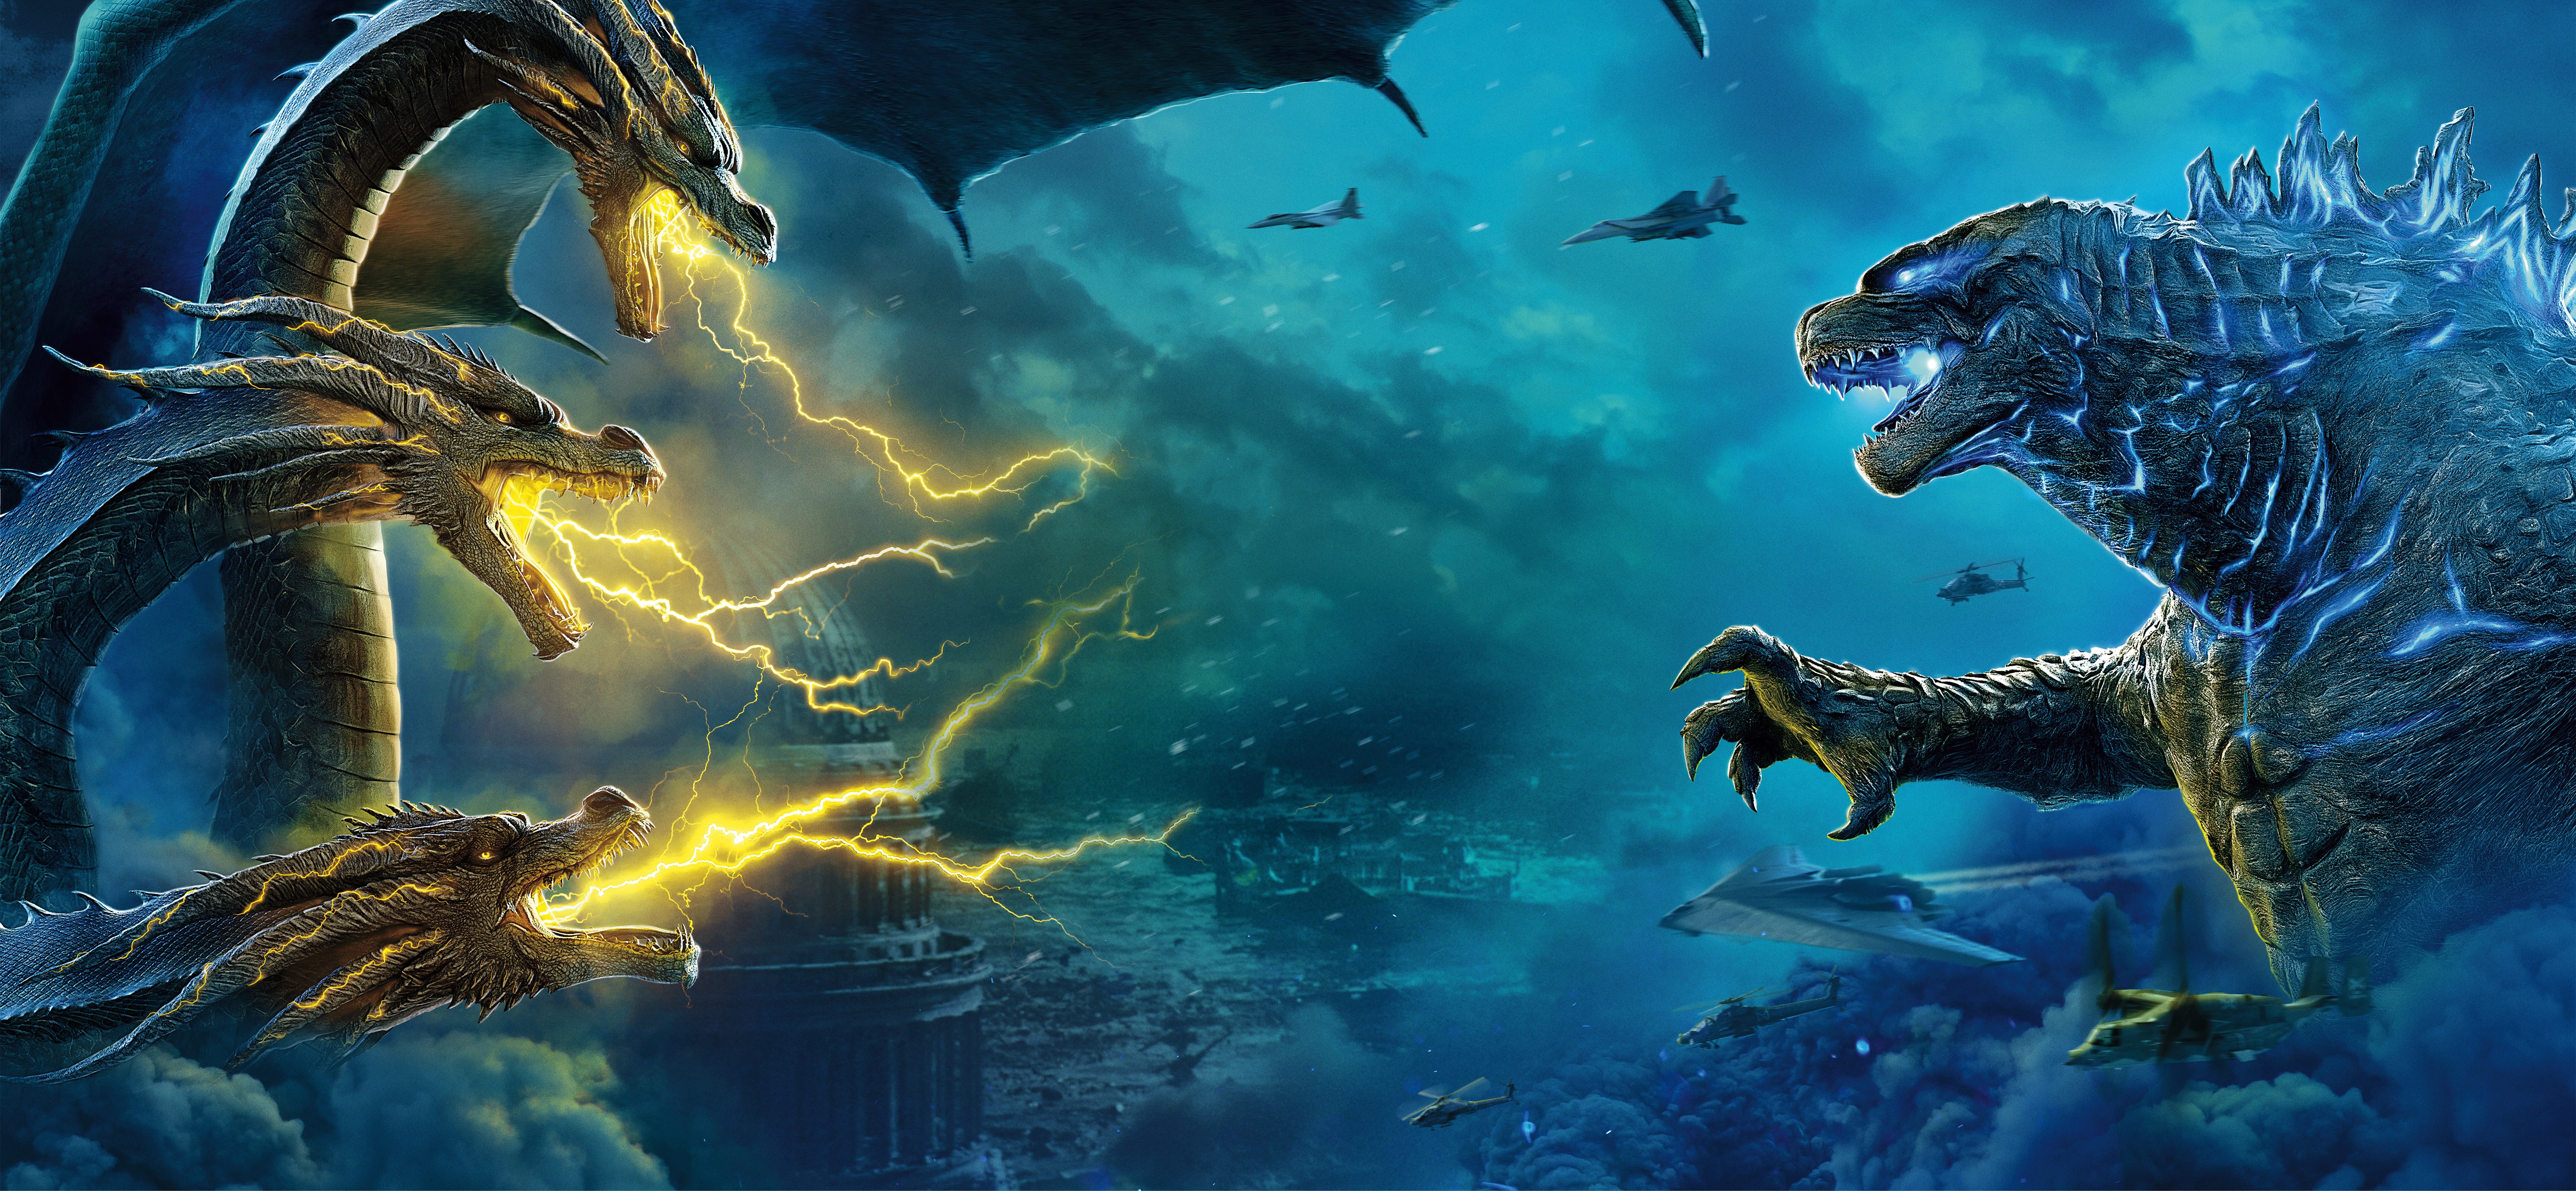 2019 Movie Wallpaper Of Godzilla King Of The Monsters - Godzilla King Of The Monsters Banner - HD Wallpaper 